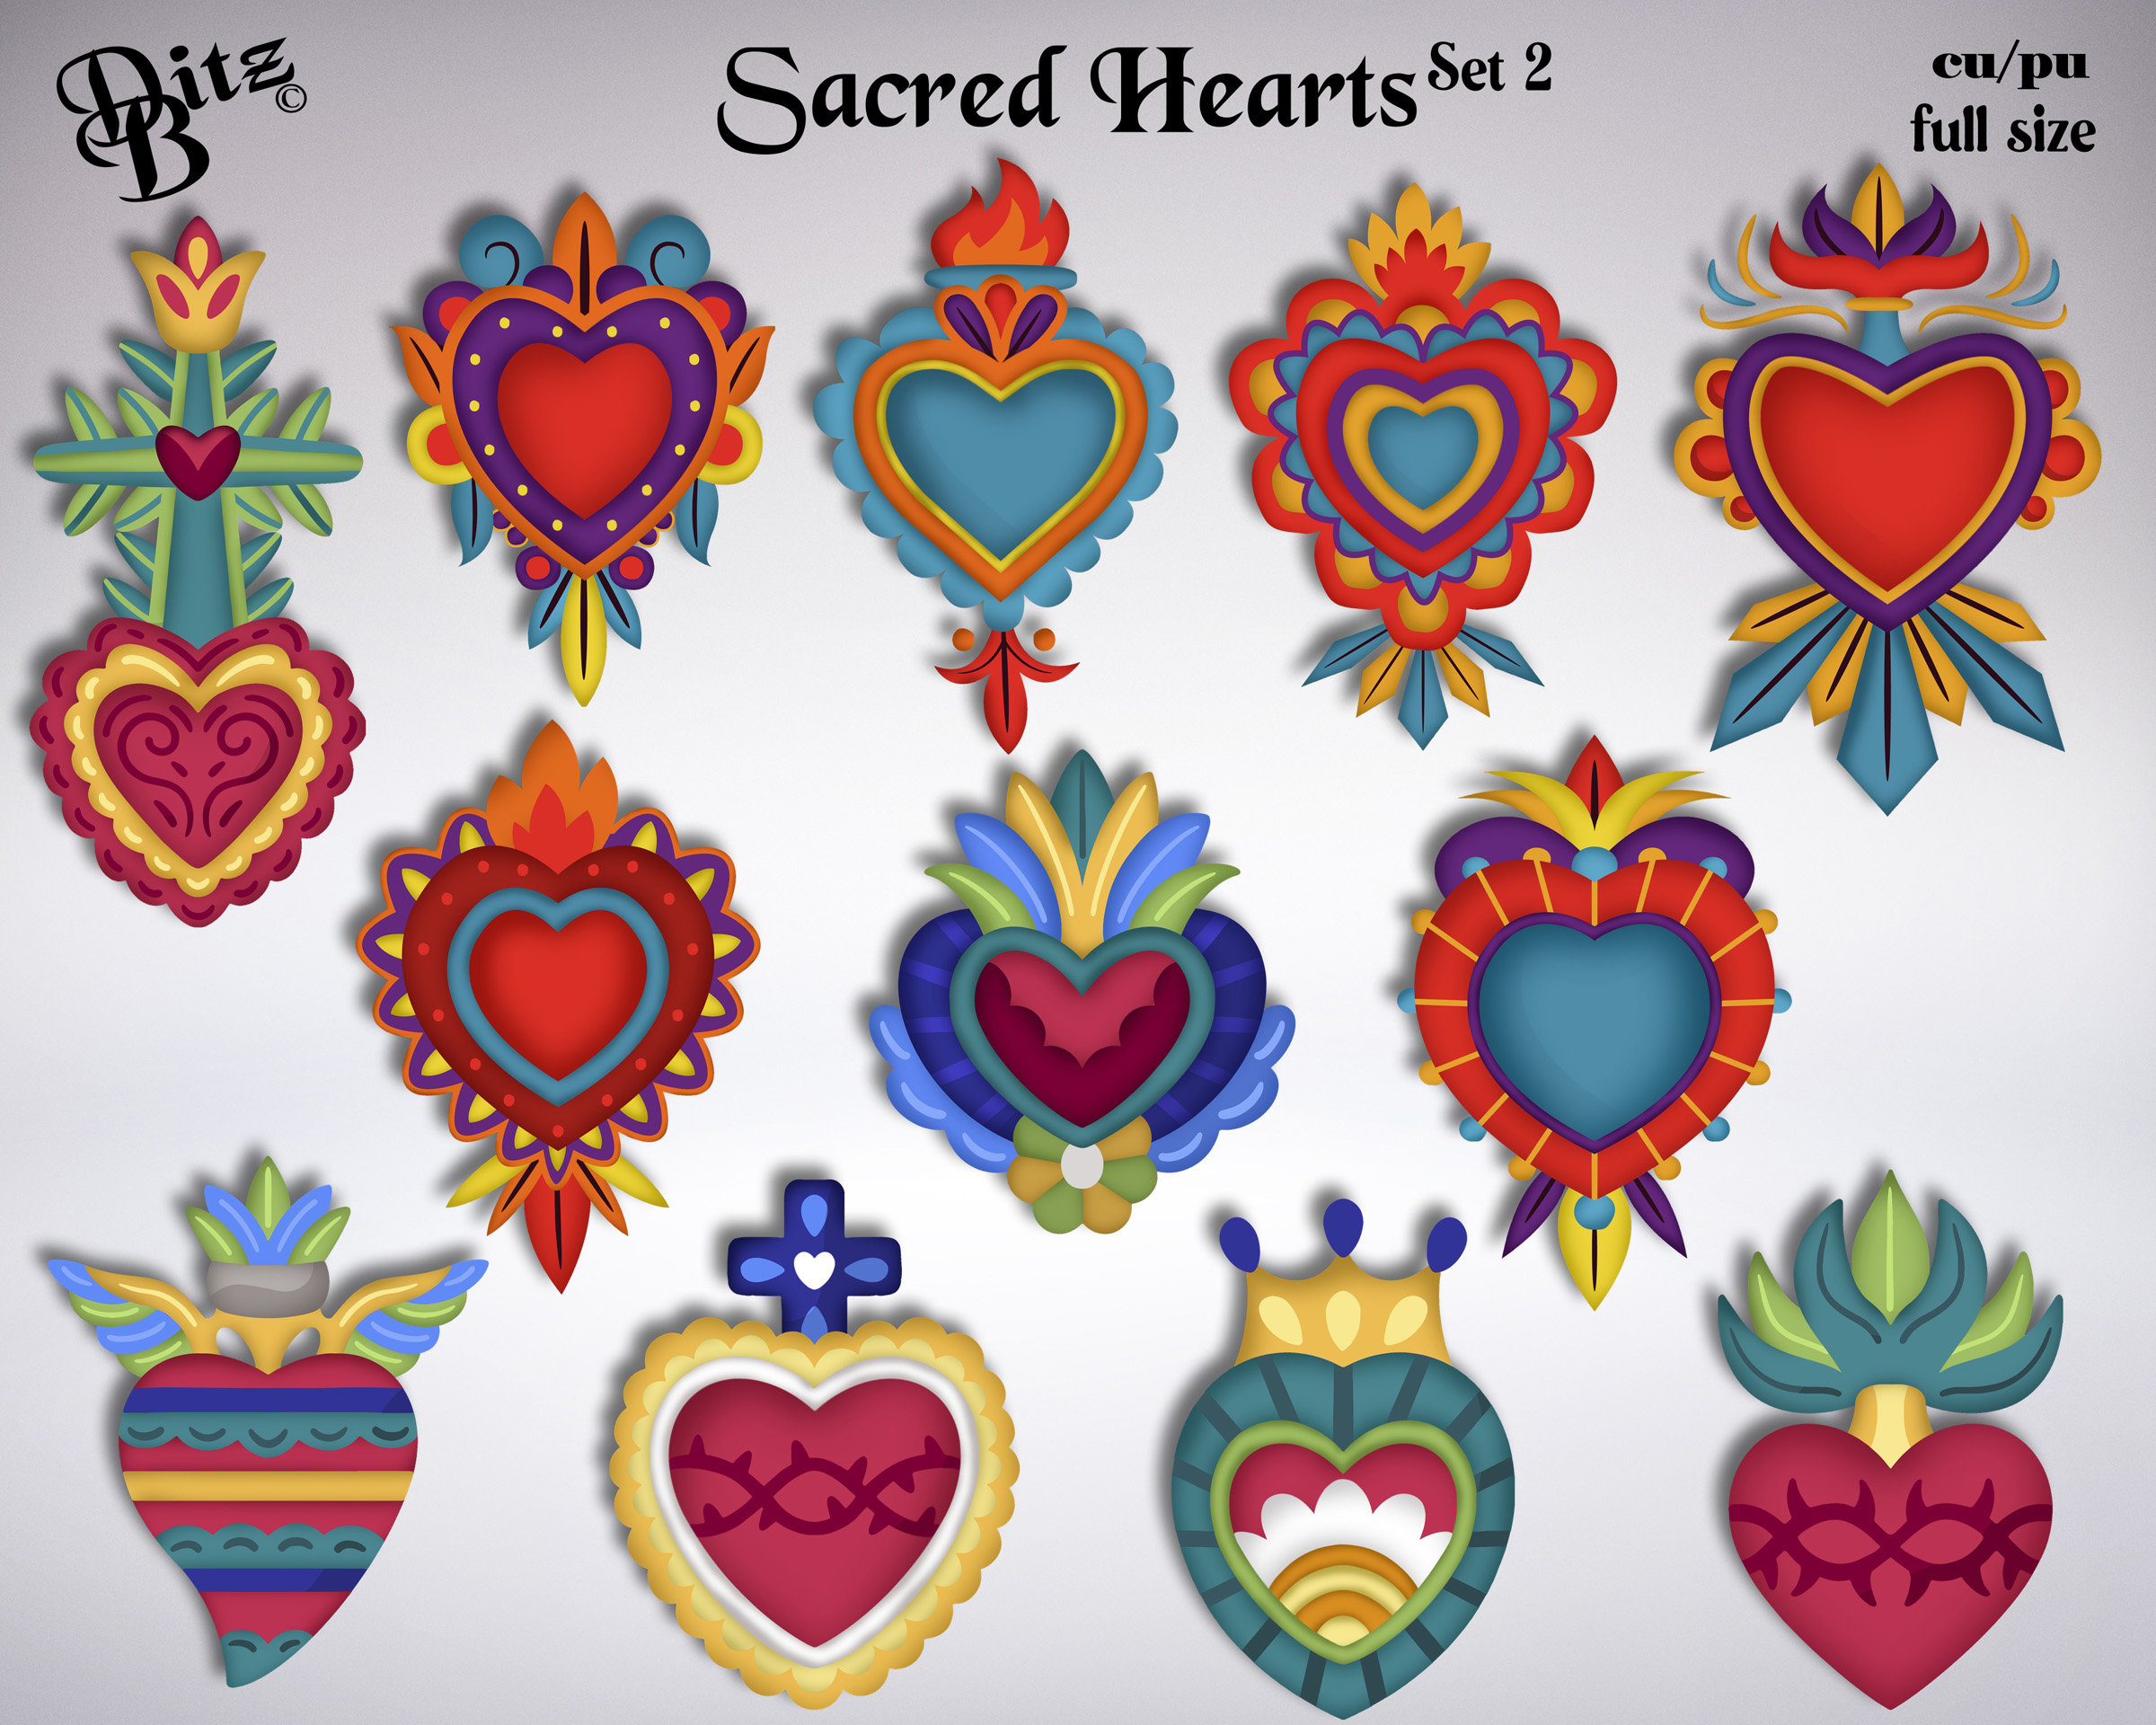 Four Sacred Hearts